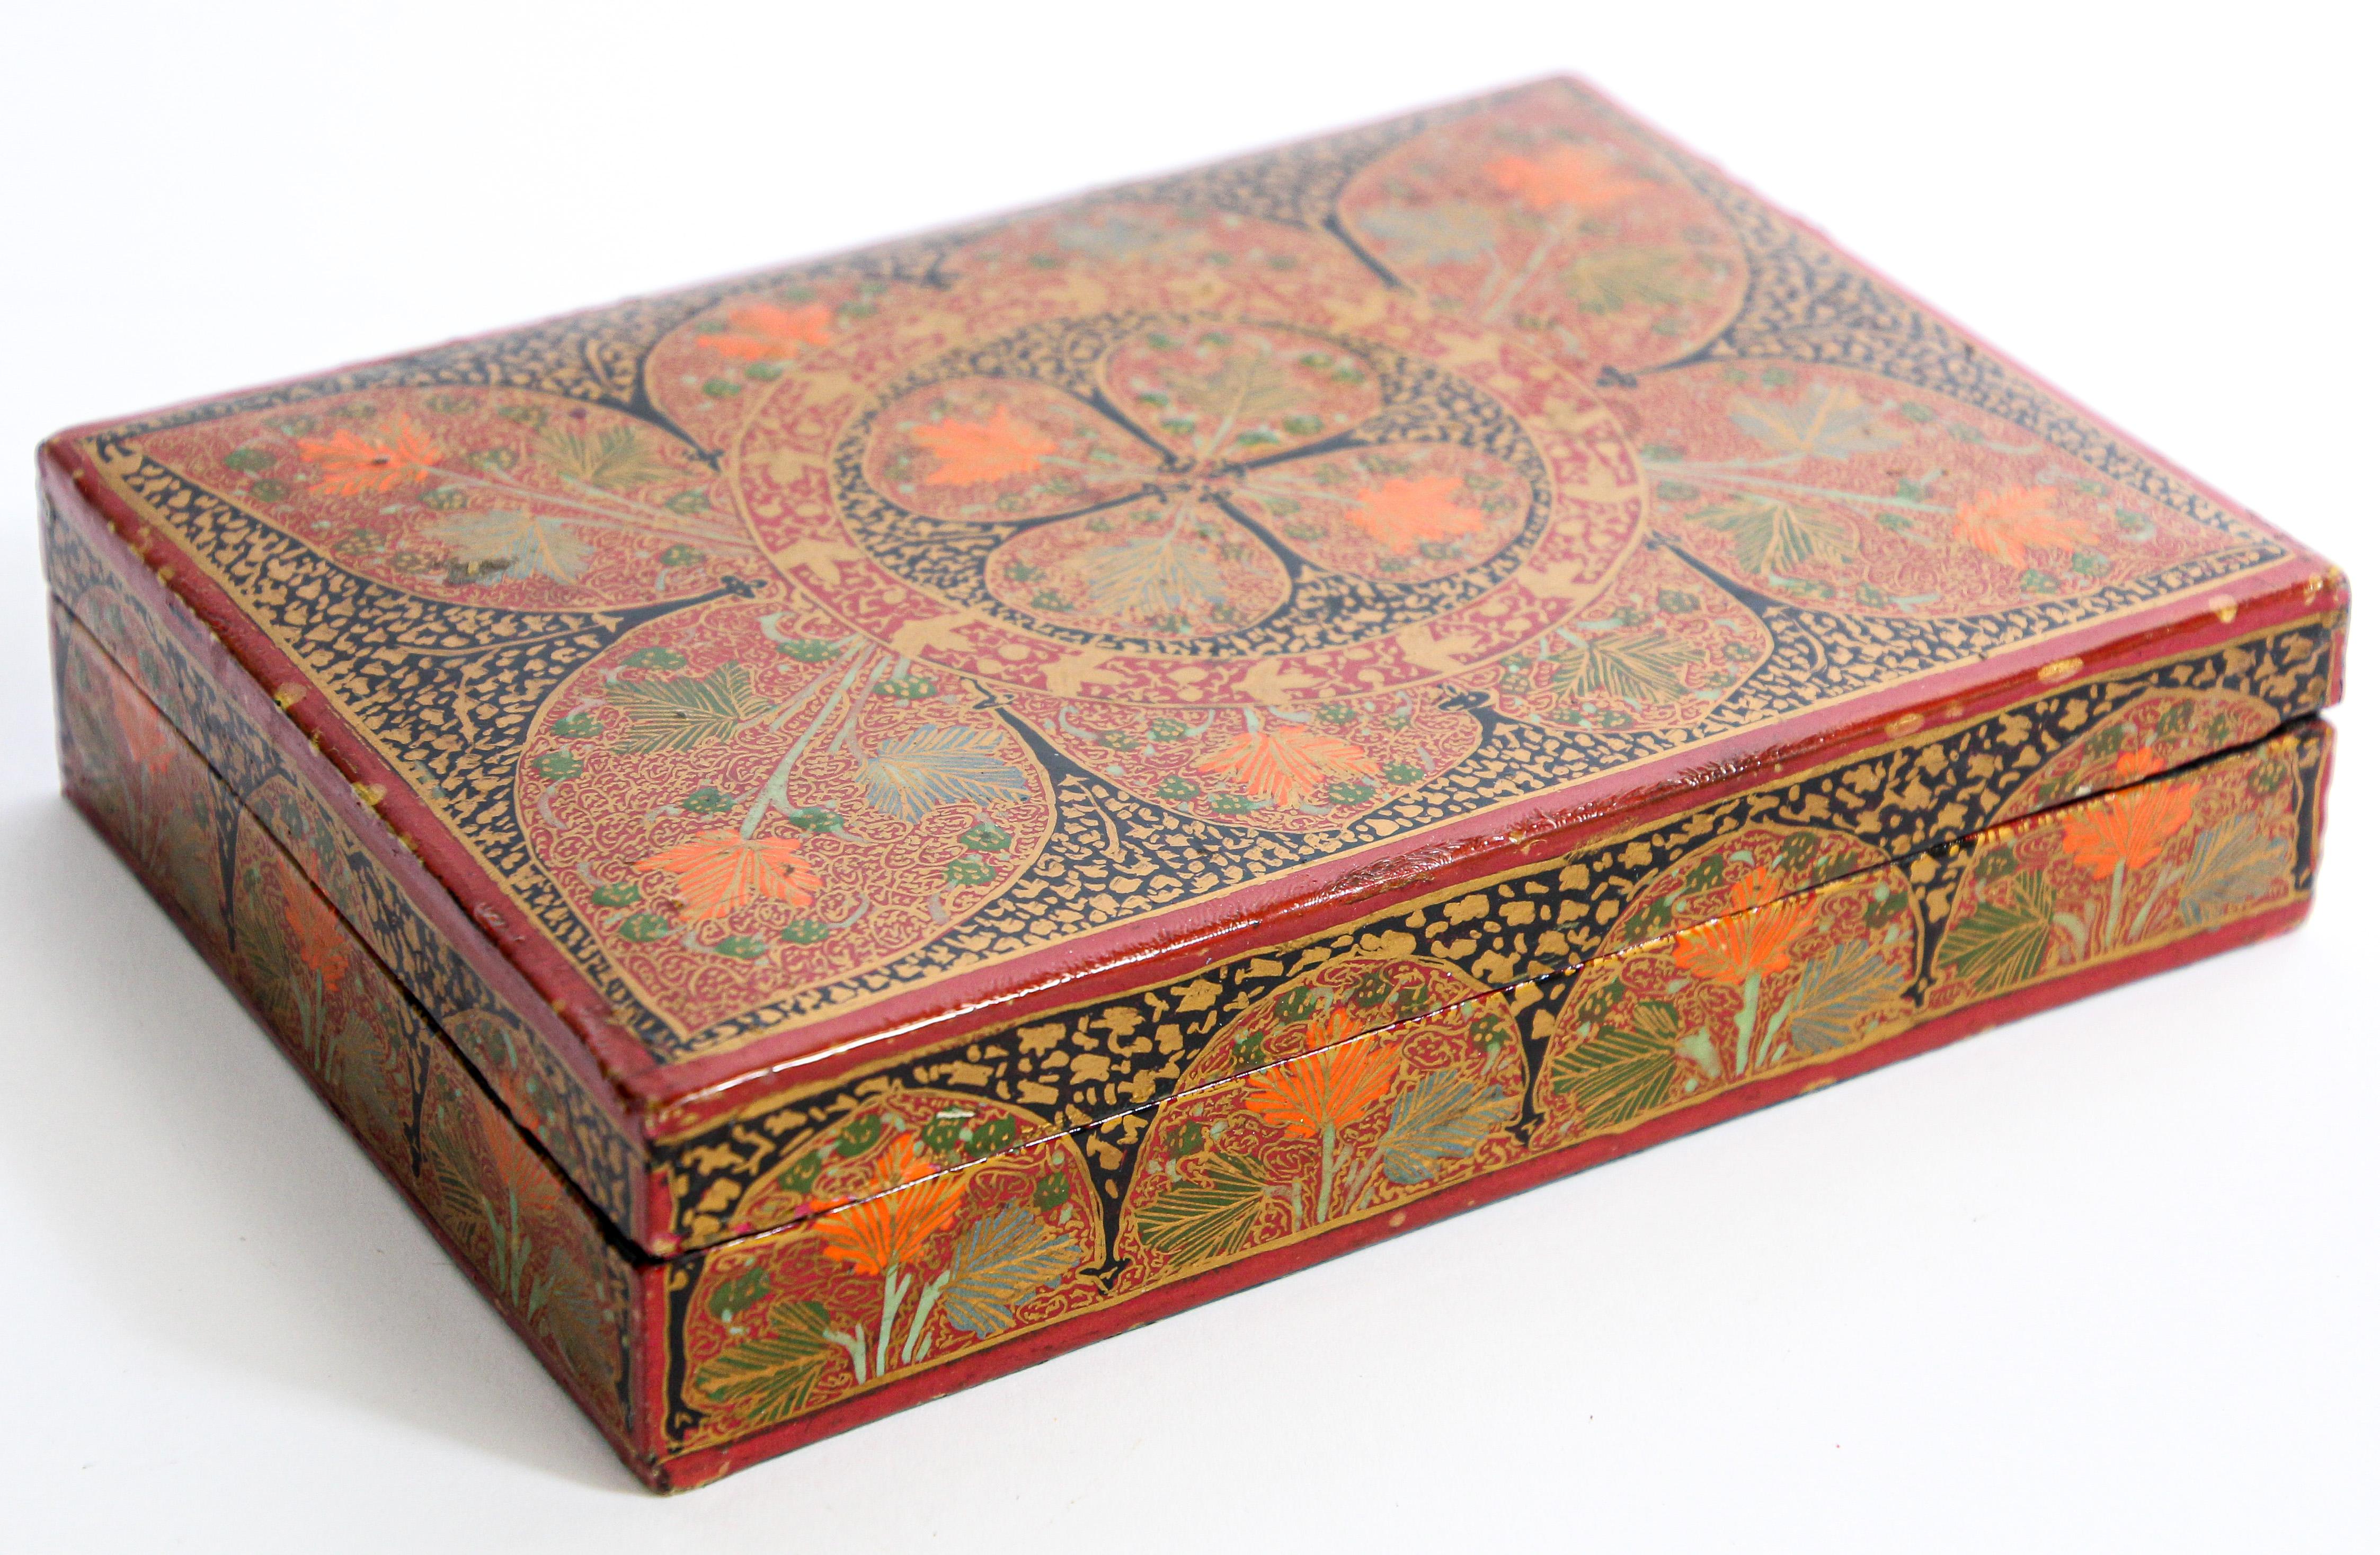 Hand-Painted Hand Painted Rajasthani Moorish Lacquer Box